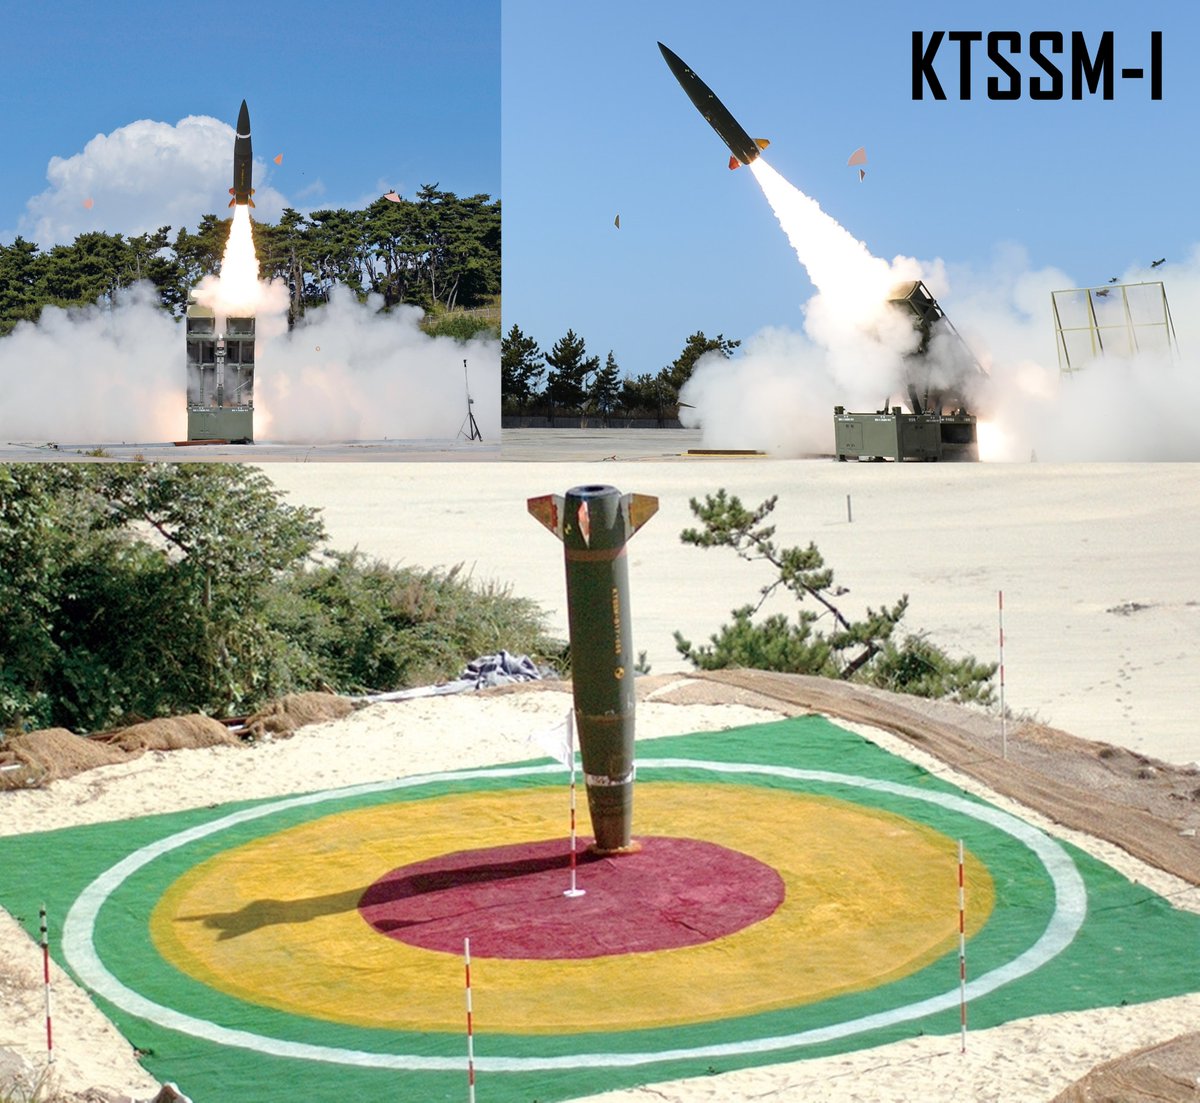 KTSSM-1